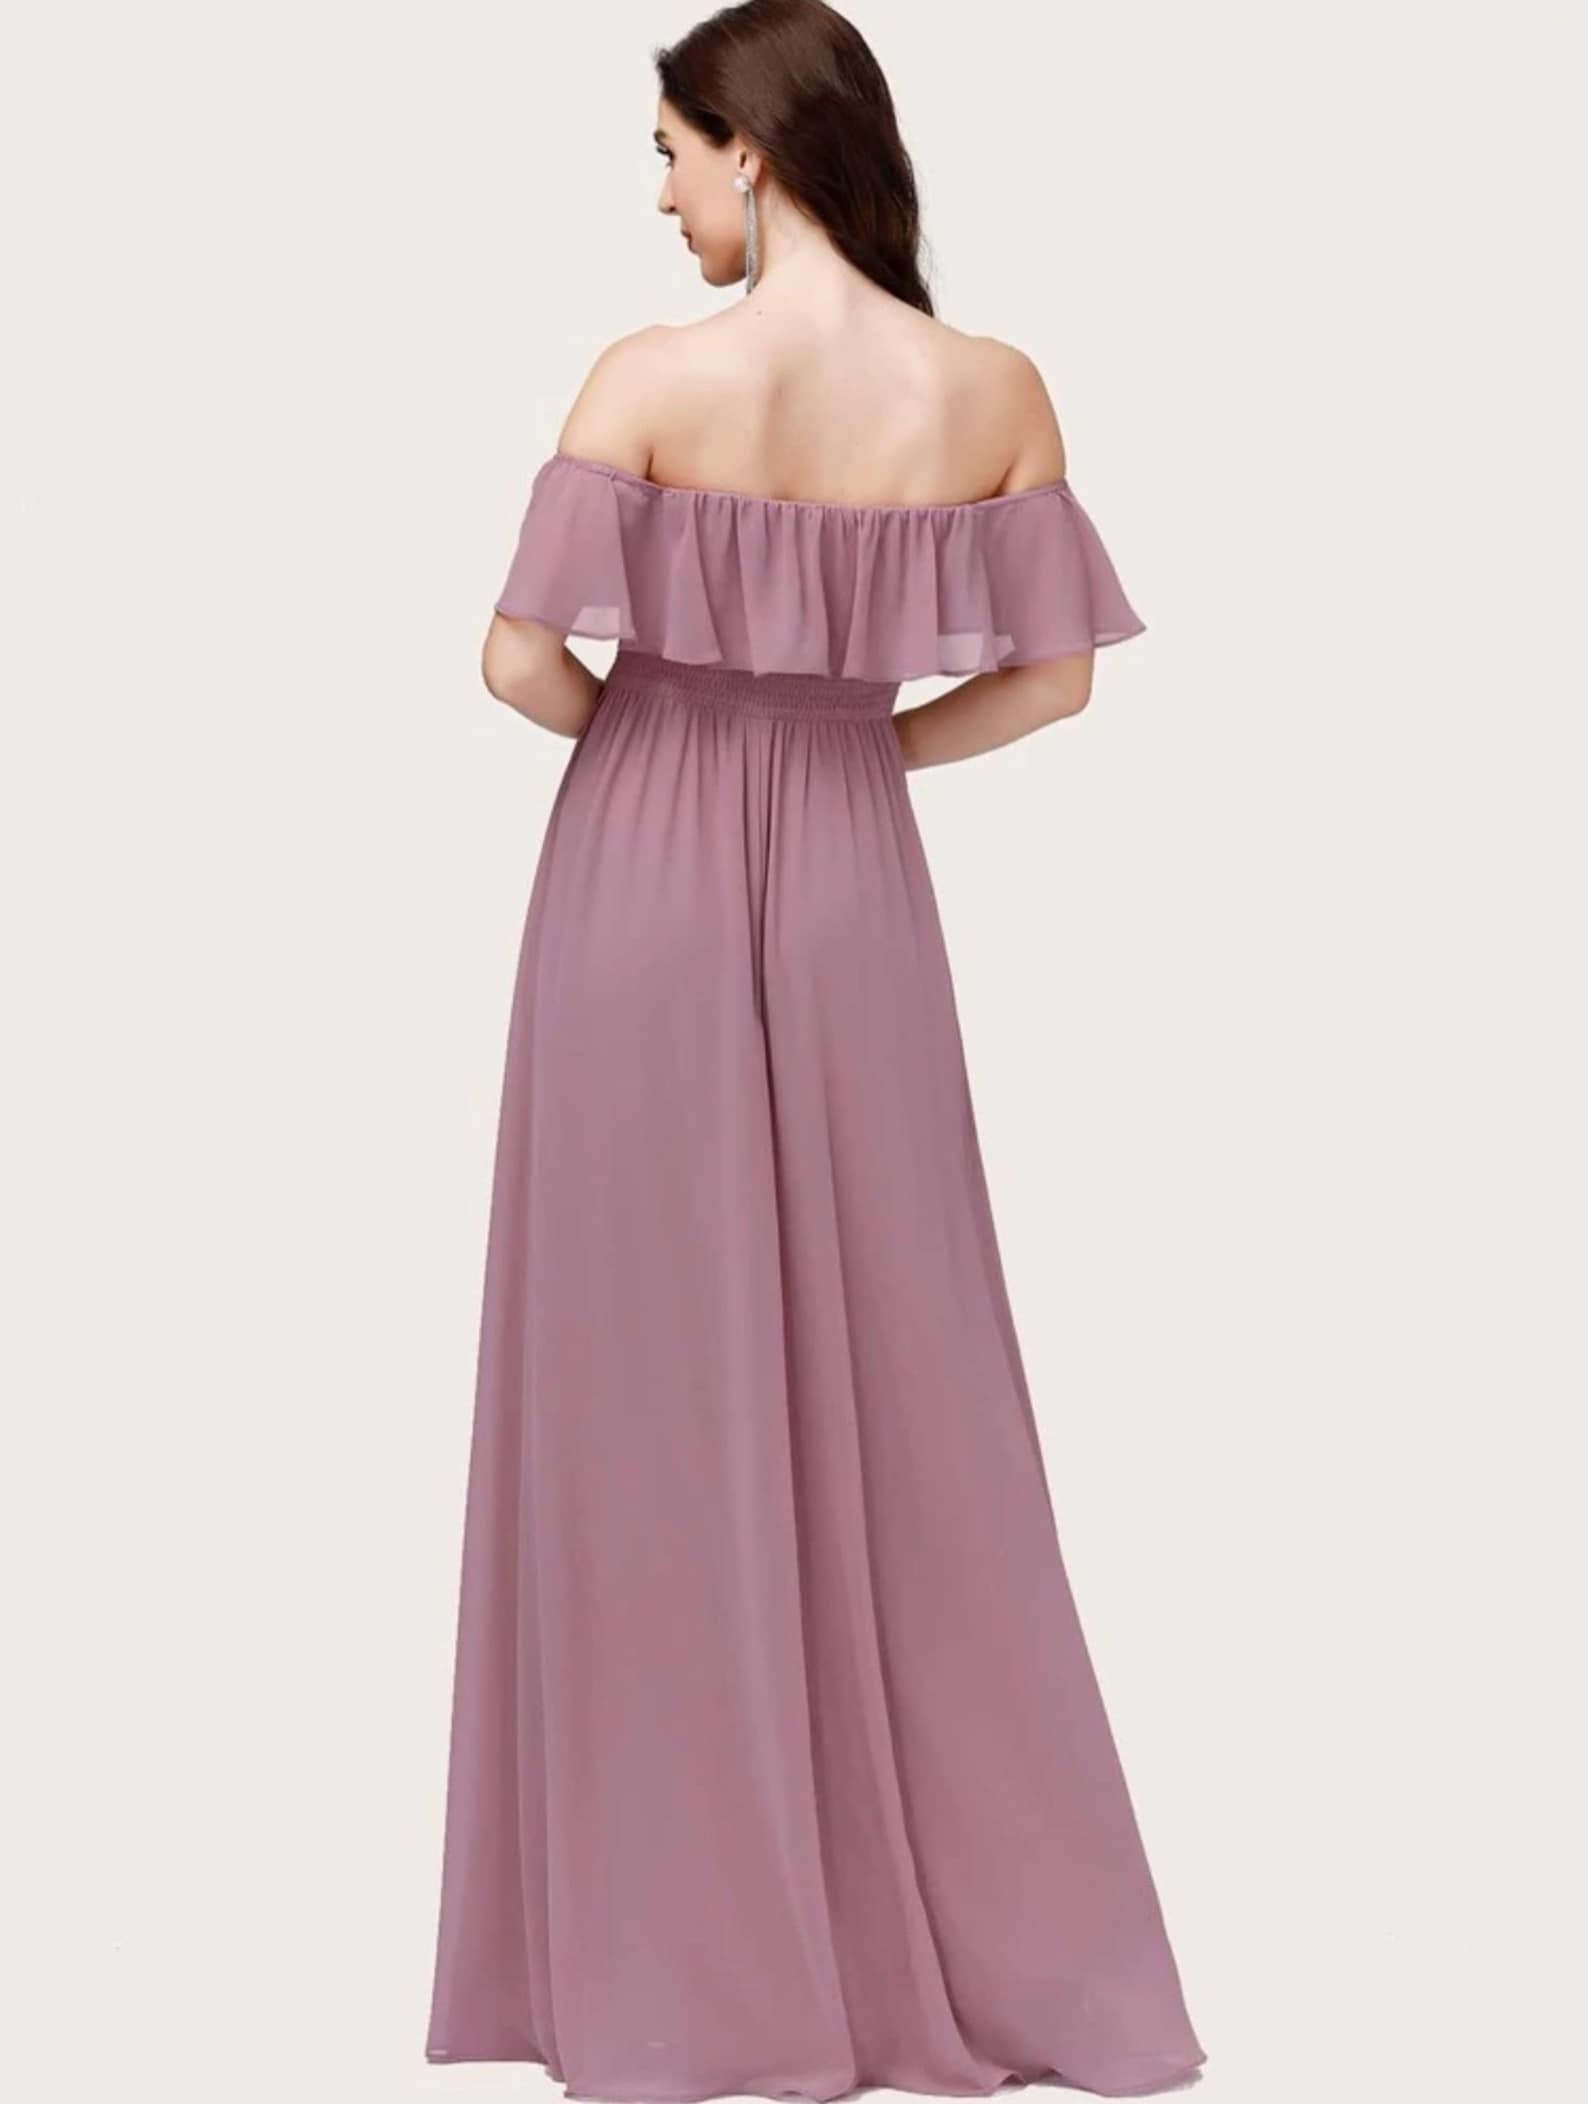 Ruffled off-the-shoulder full-length chiffon bridesmaid dress | Etsy